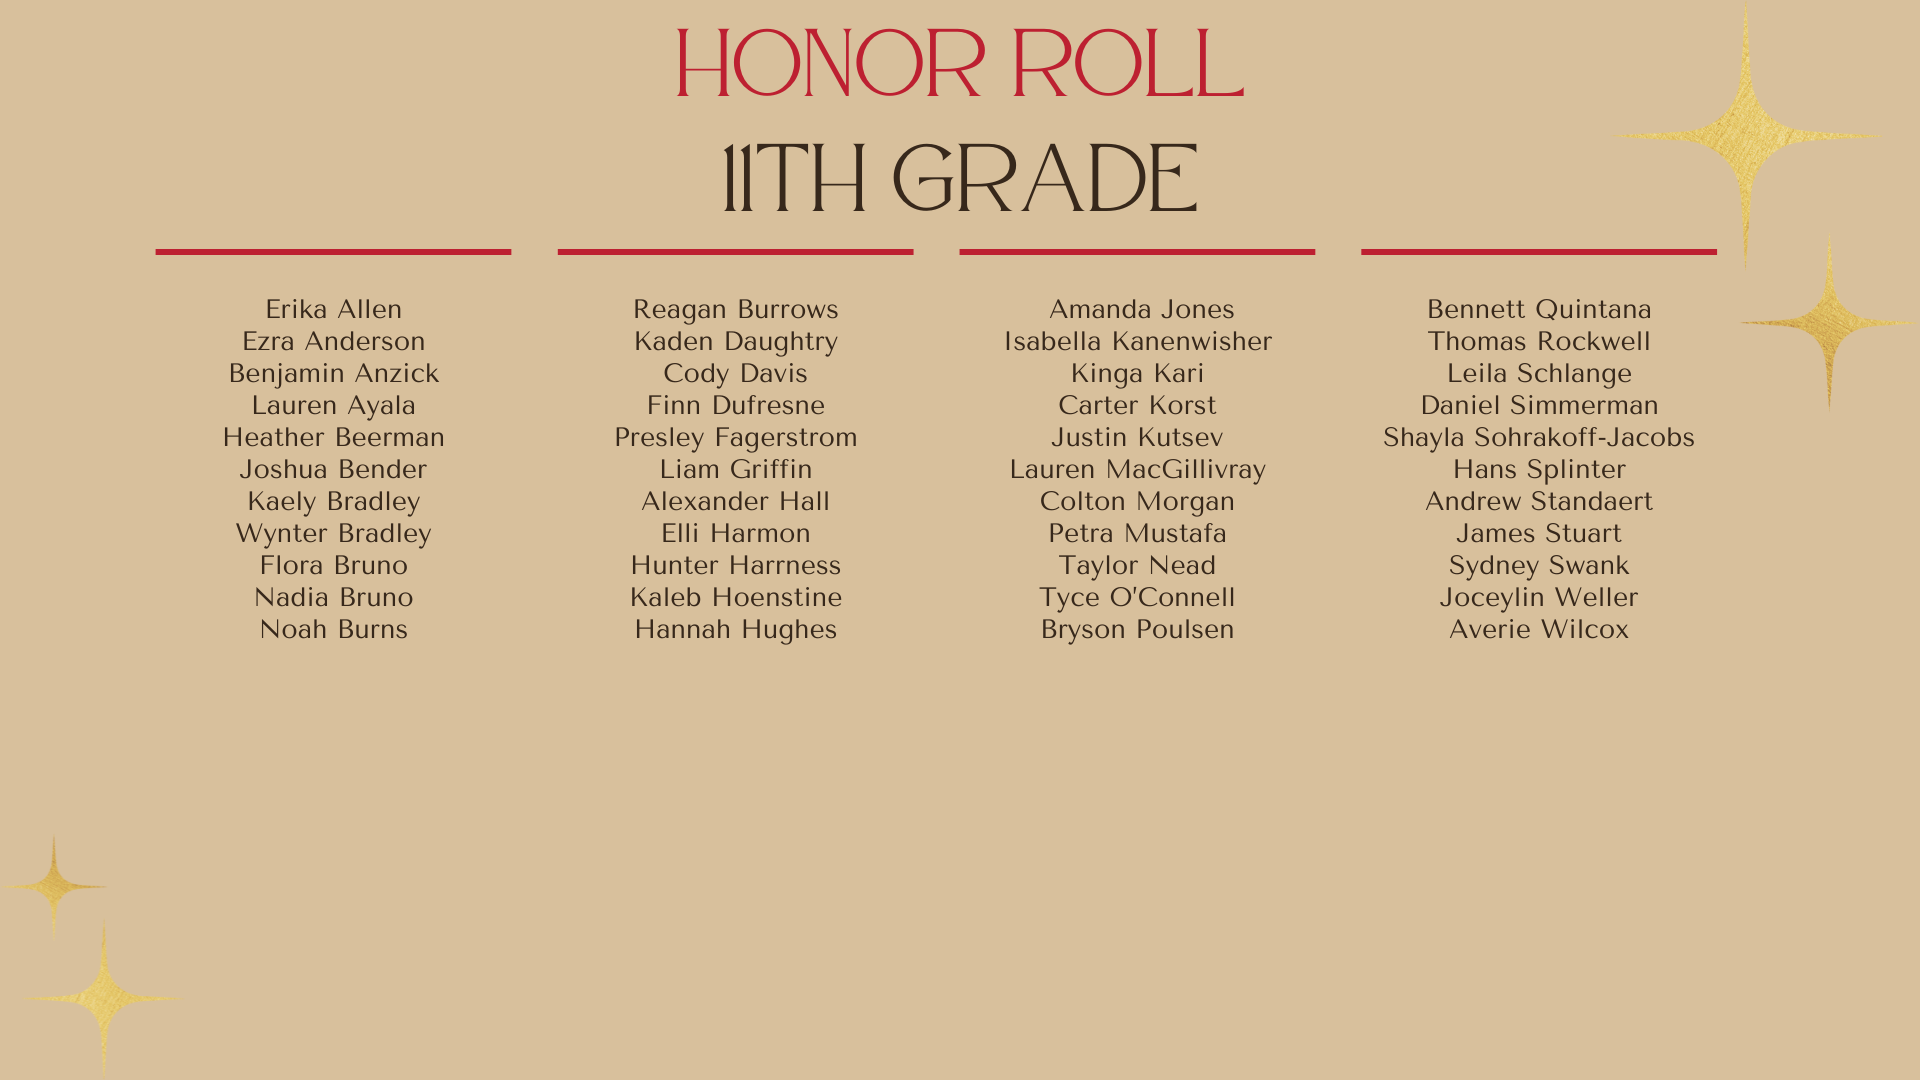 Honor Roll 11th Grade